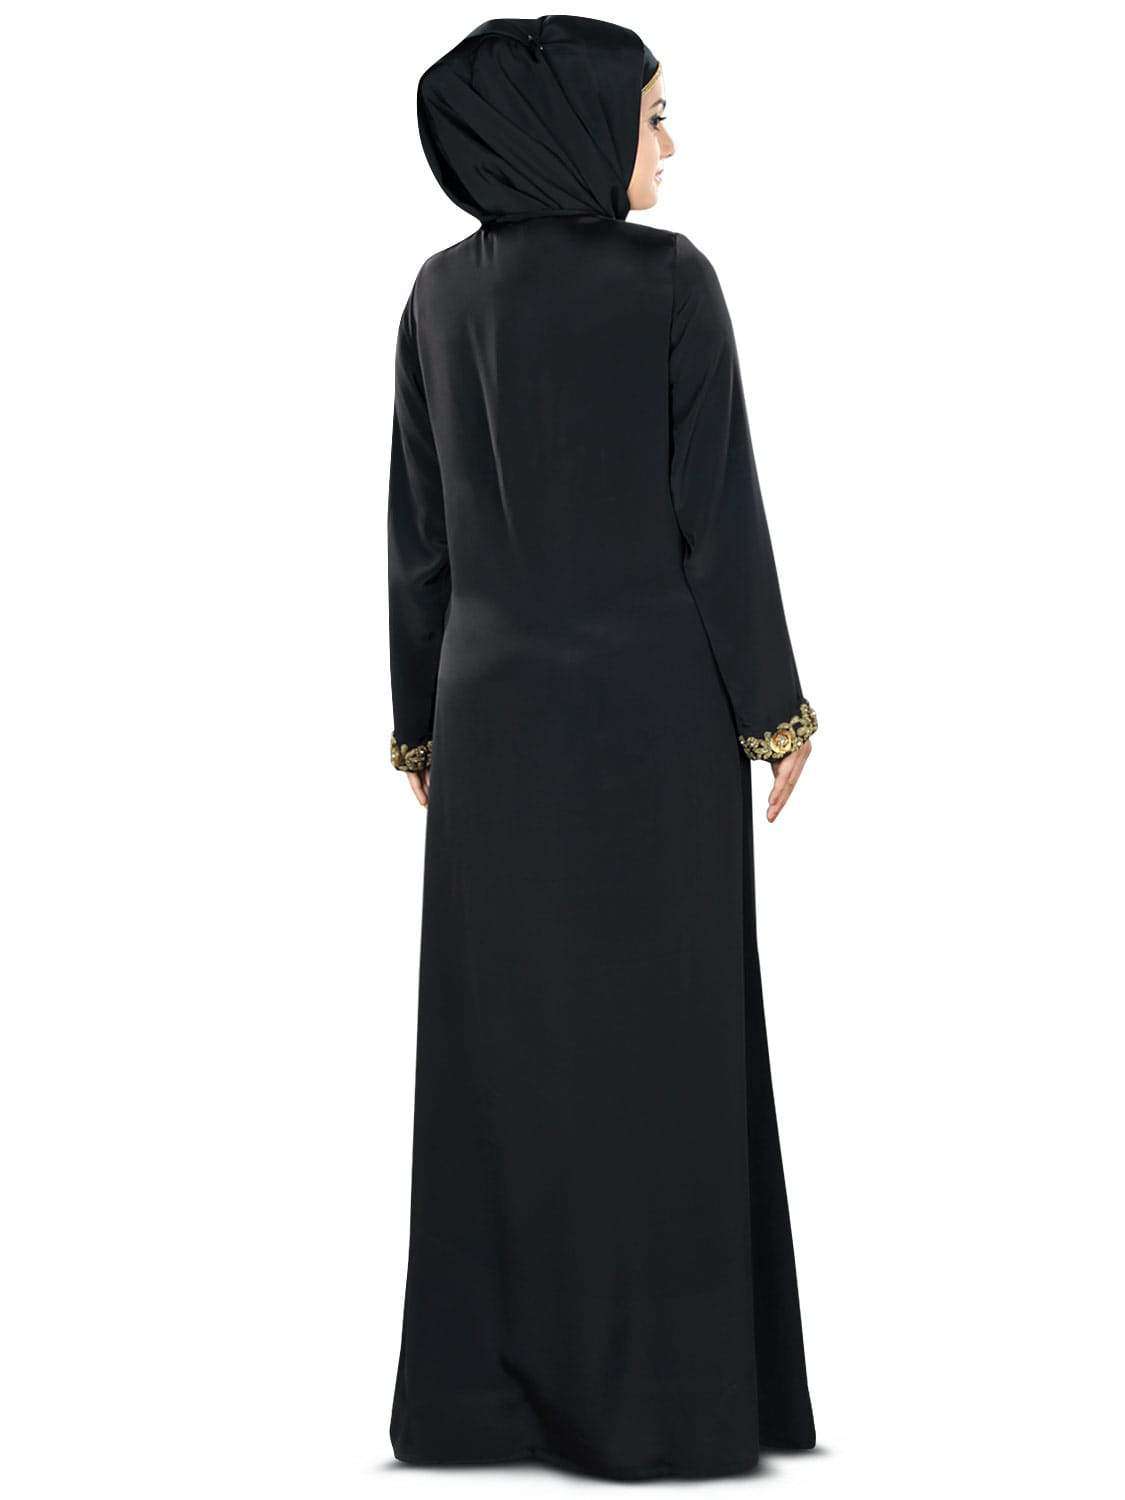 Buy Fiddah Gold Hand Embroidered Burqa Online – MyBatua.com